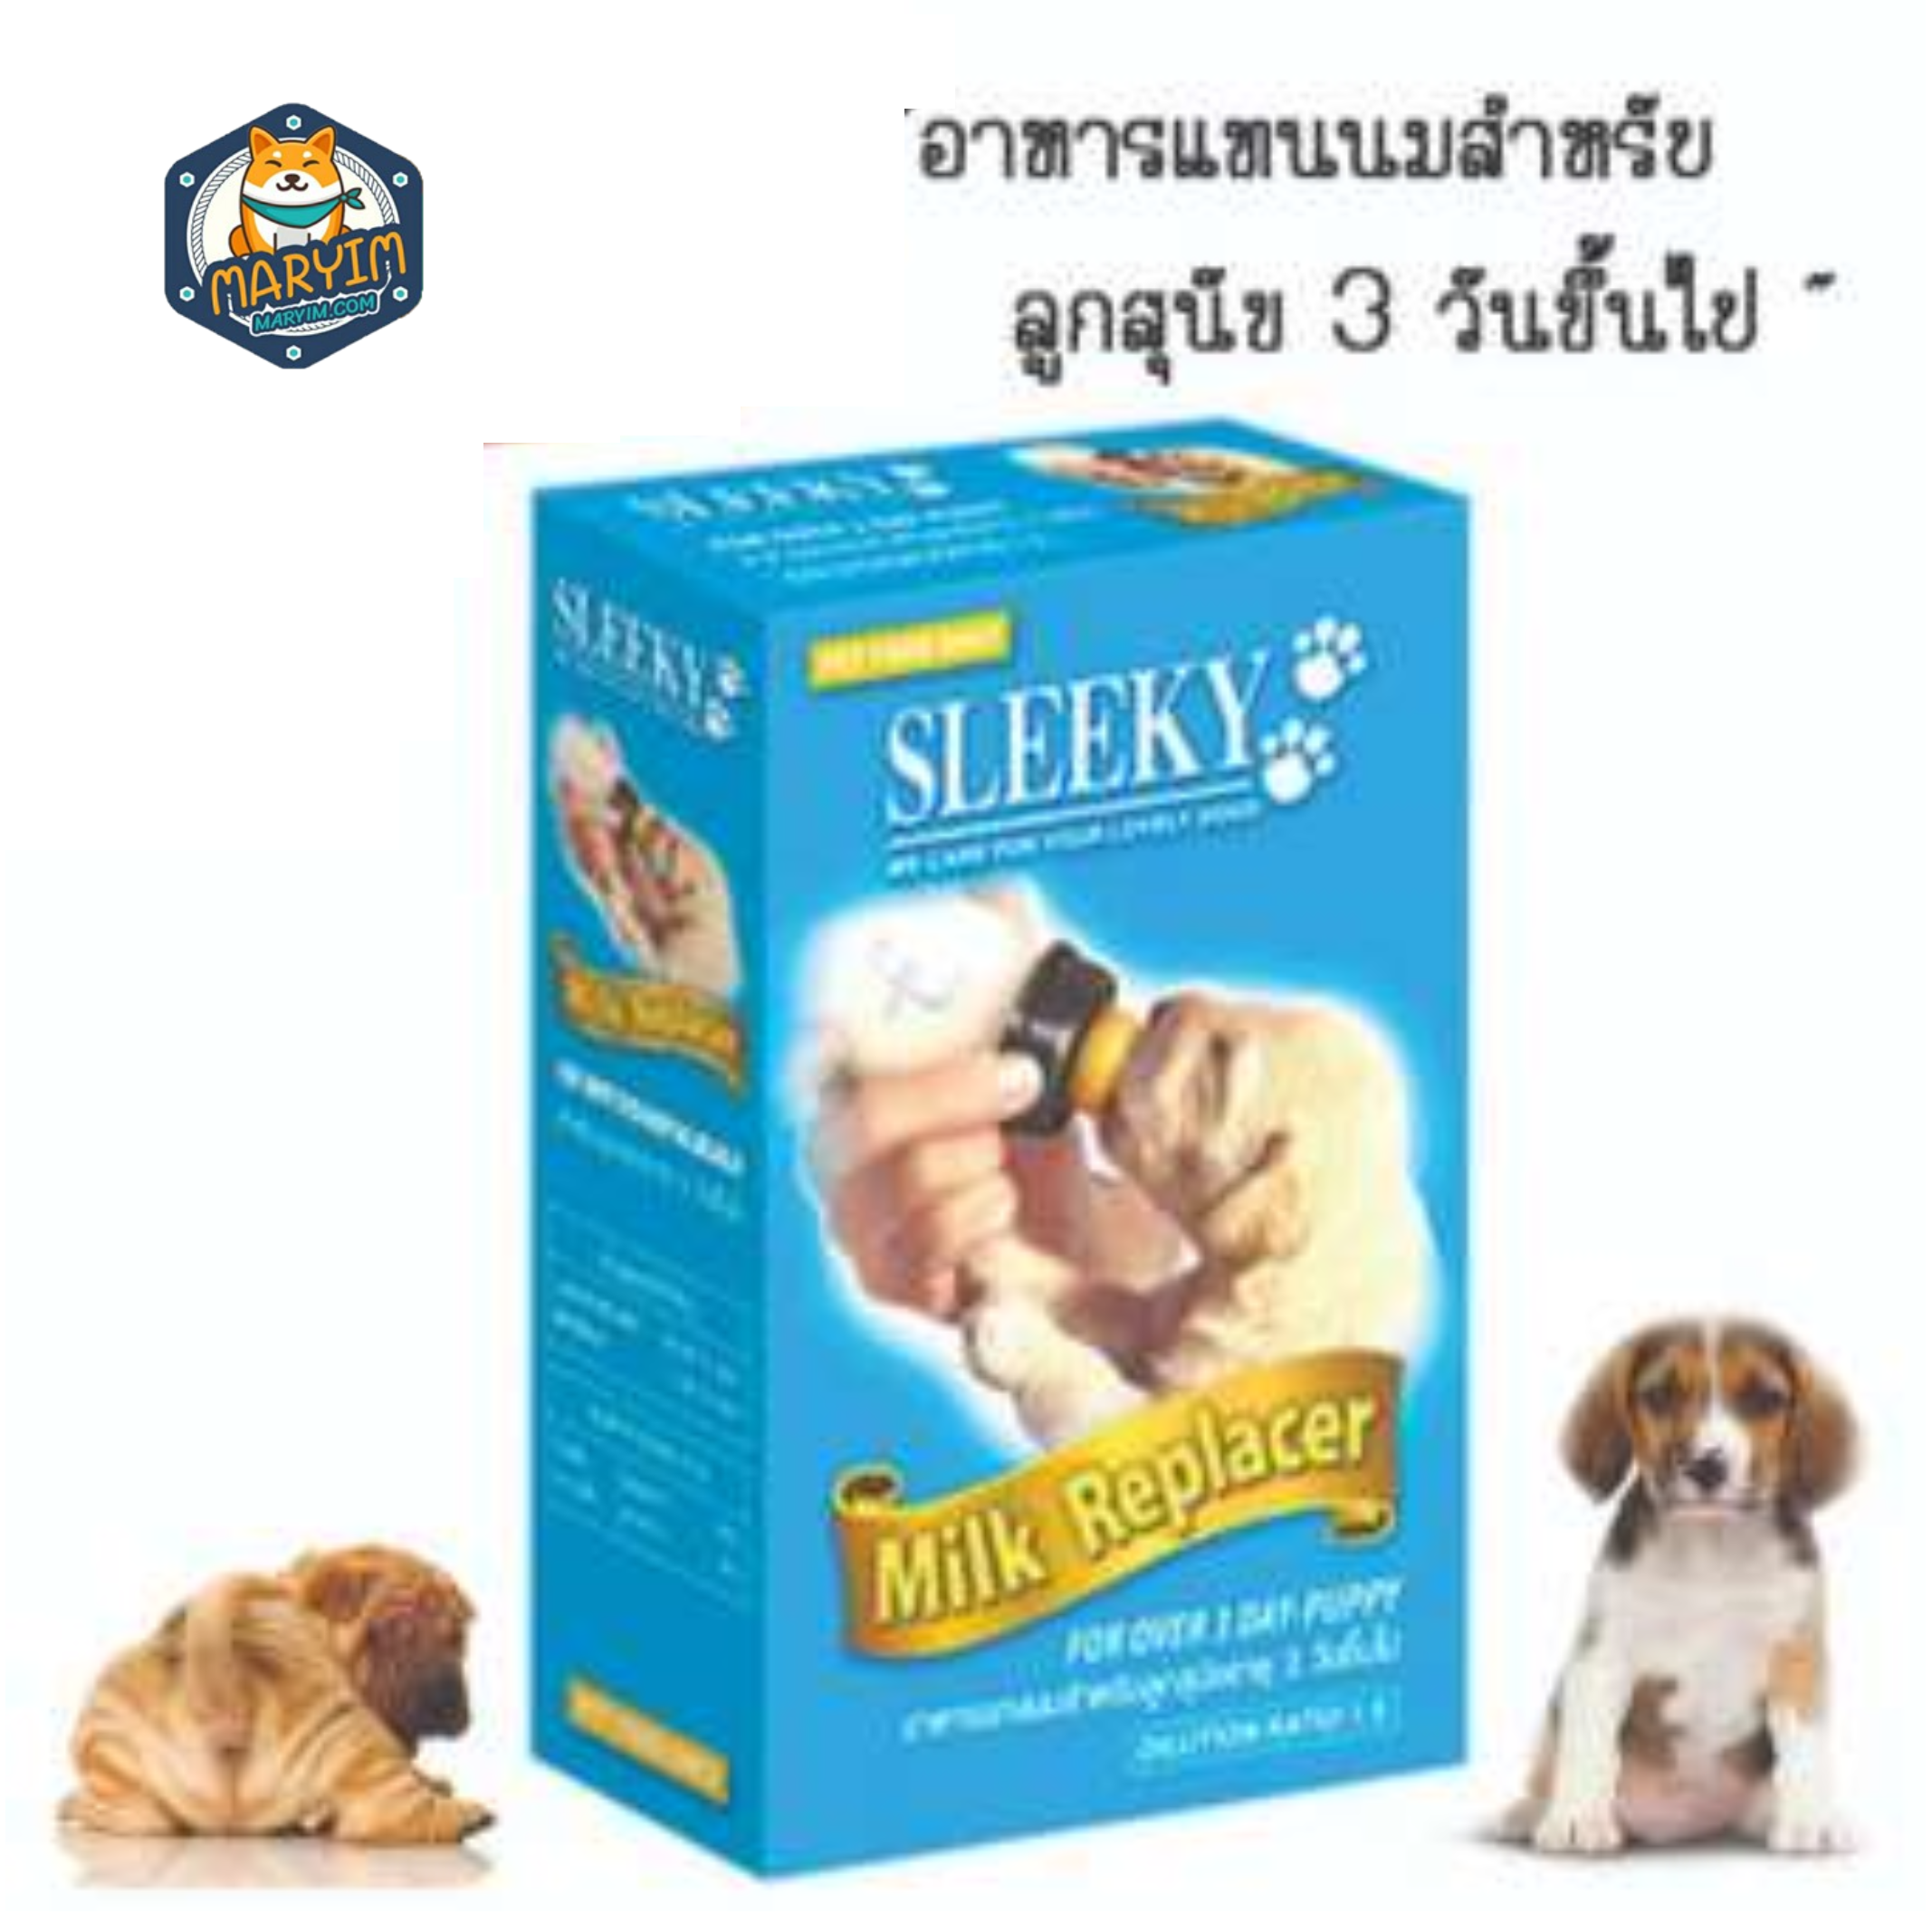 Sleeky อาหารทดแทนนมสำหรับลูกสุนัข ลูกแมว และสัตว์เลี้ยง อายุ 3 วัน ขึ้นไป ( 300g. ) Sleeky Milk Replacer 300g นมผง ลูกสุนัข 300กรัม